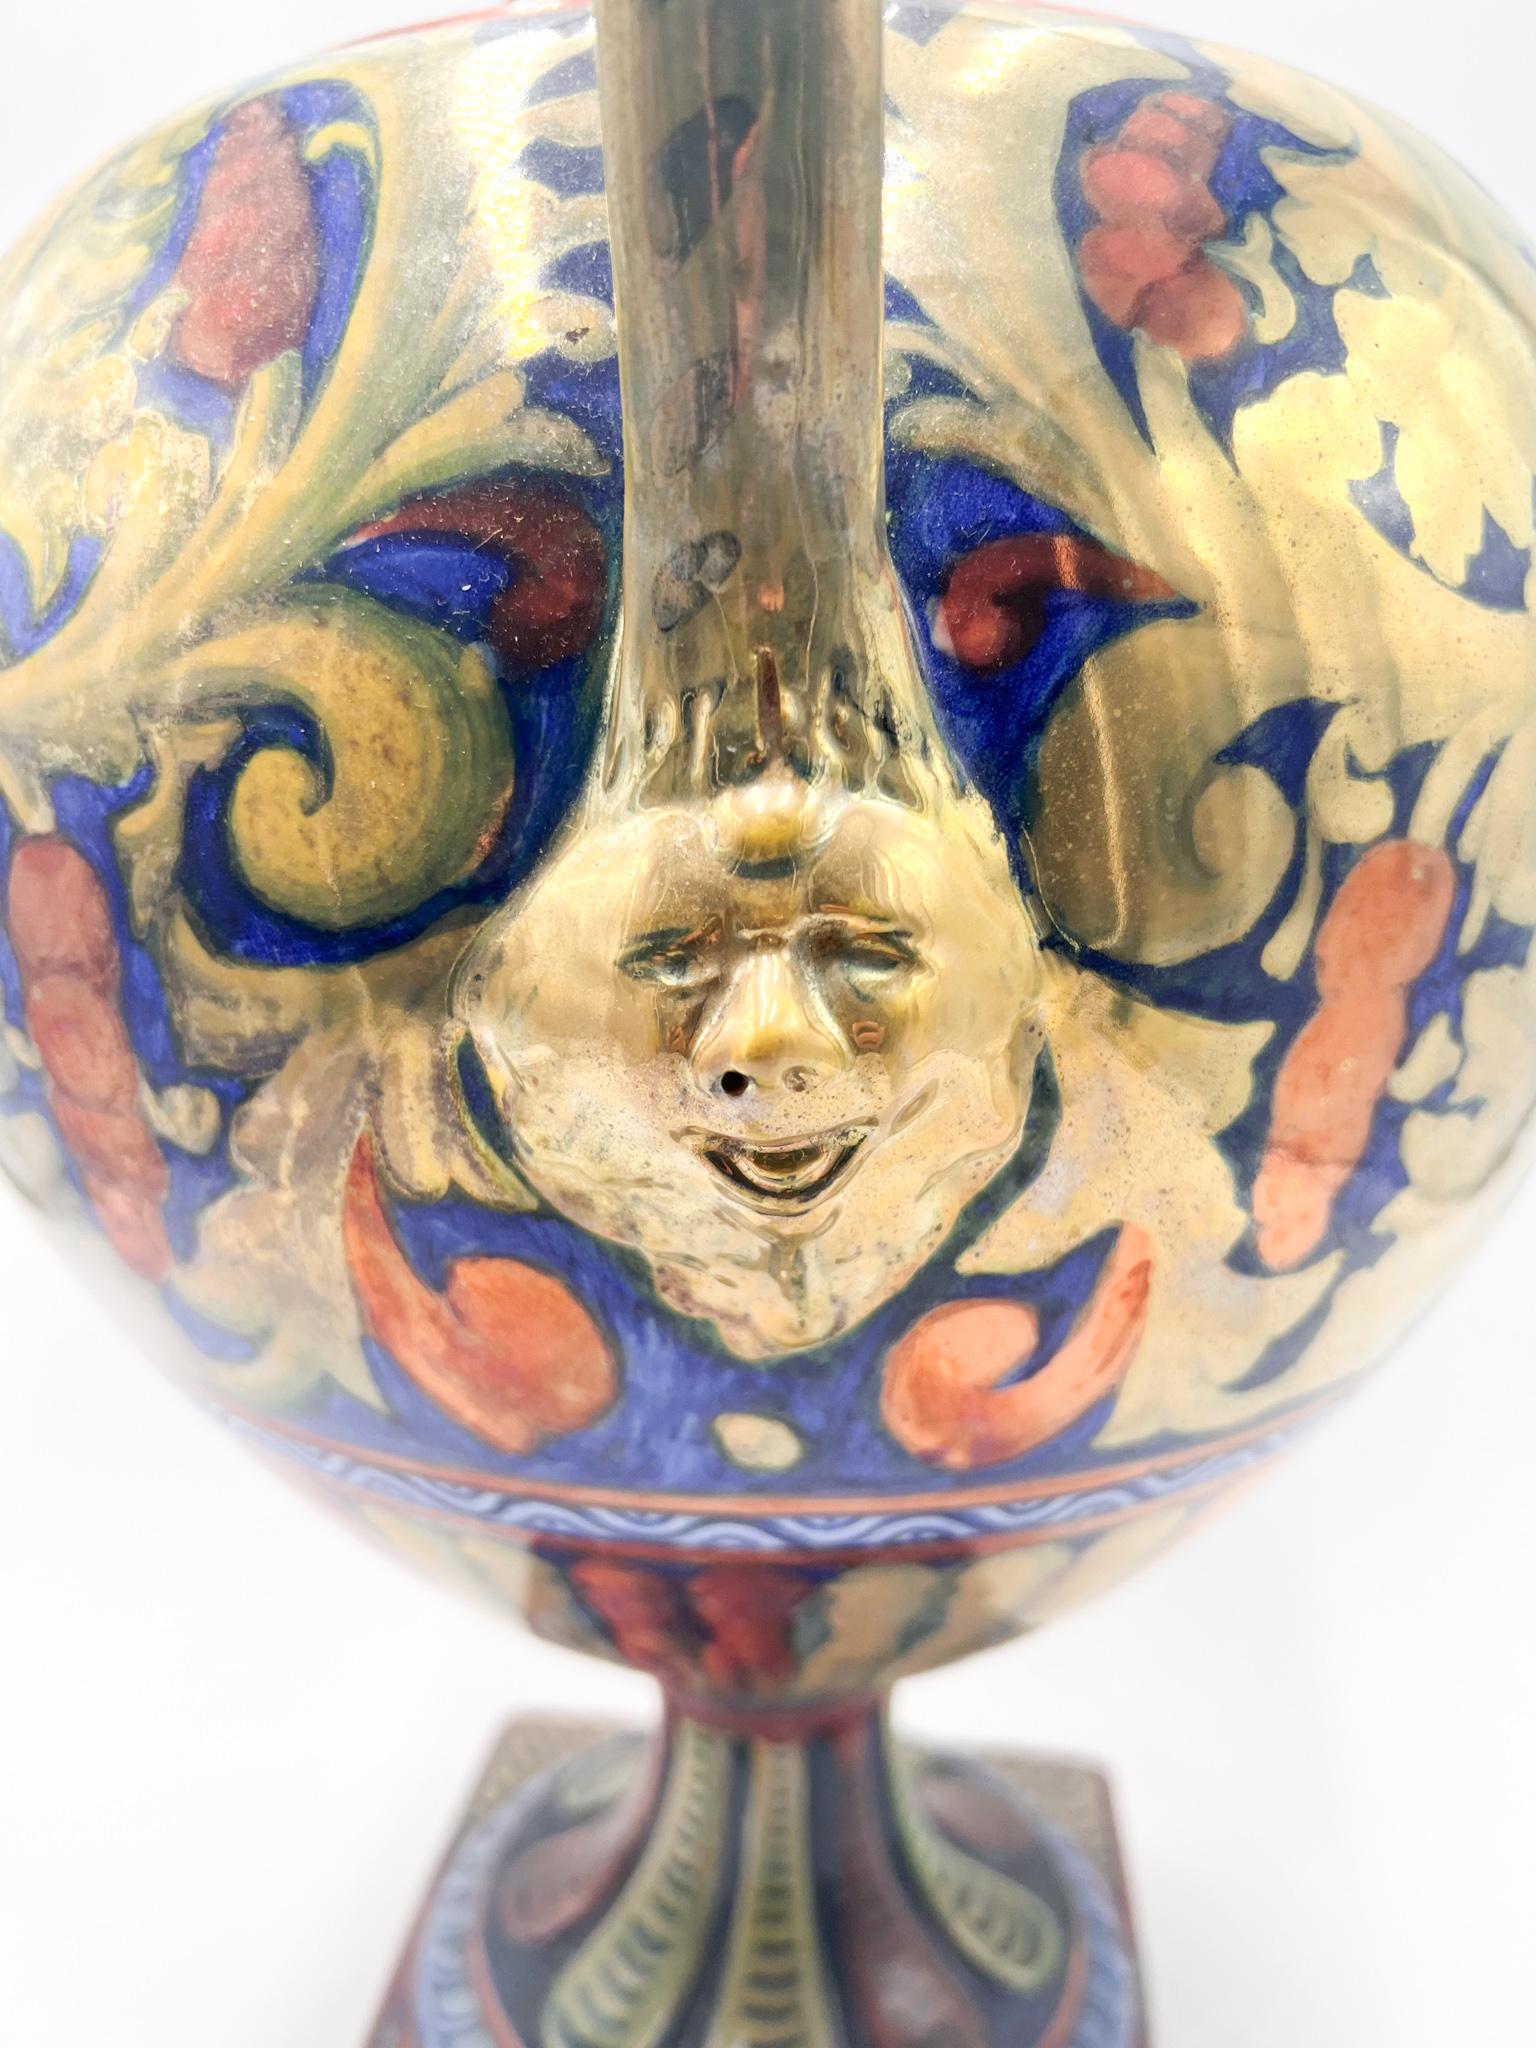 Early 20th Century Ceramic Vase by Gualdo Tadino For Sale 4